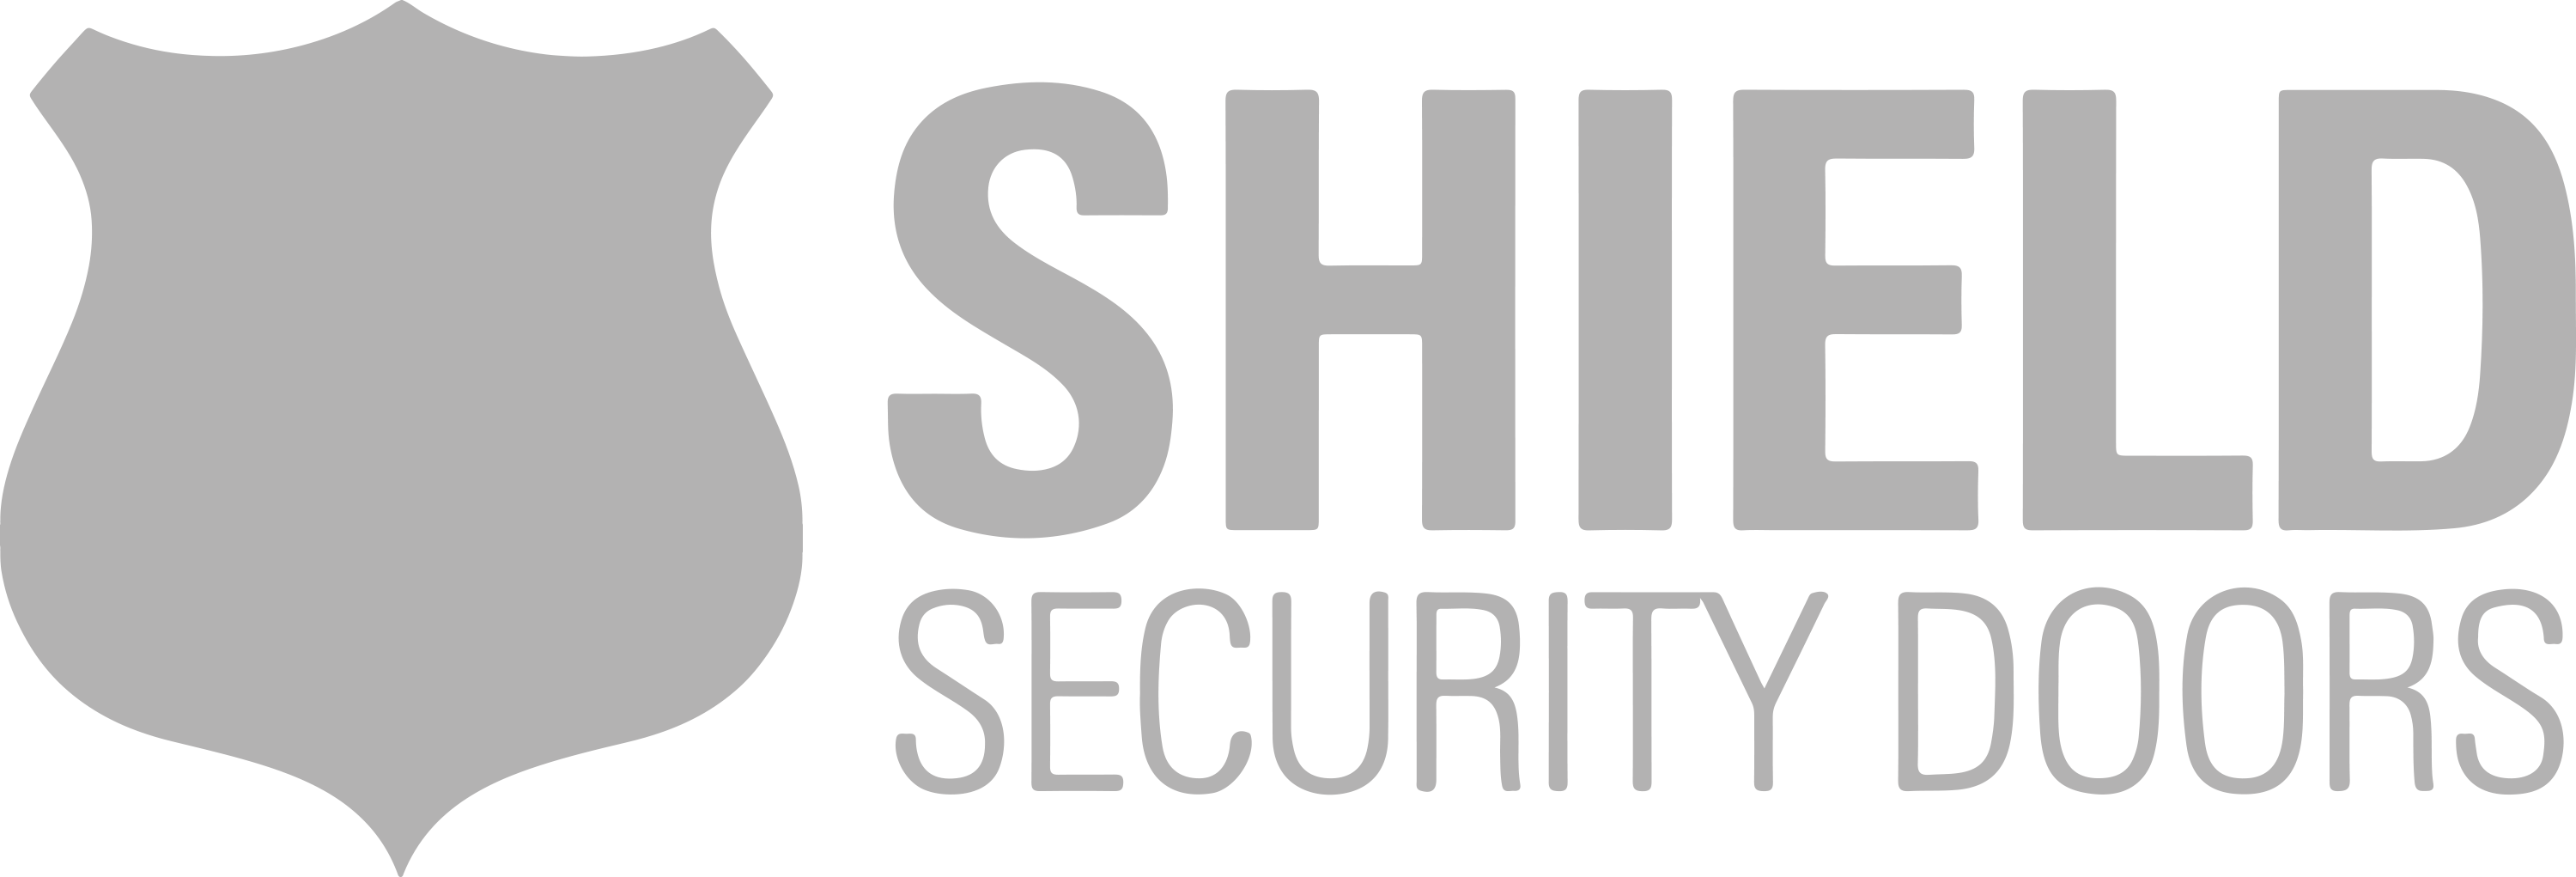 Interior Security Doors for Safe Rooms| Shield Security Doors